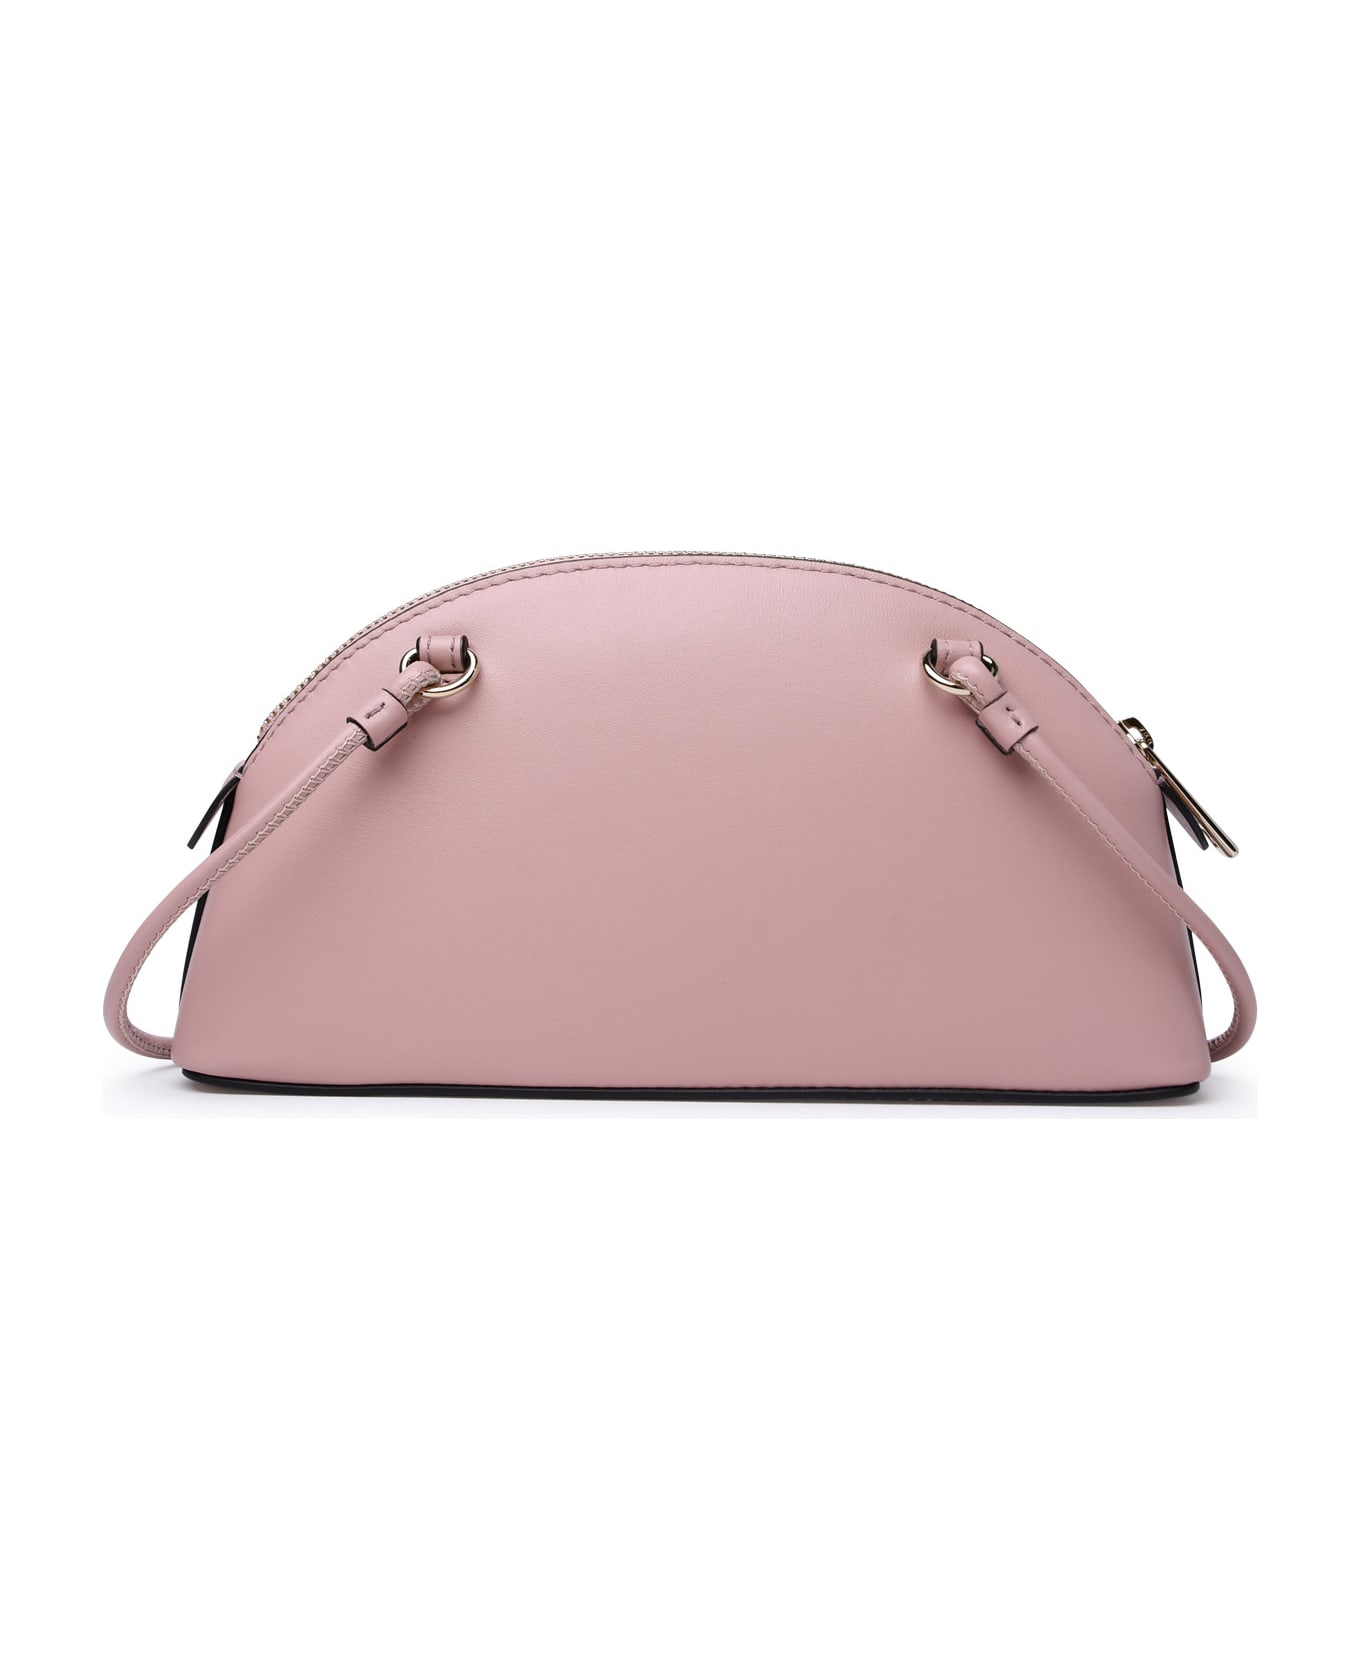 Furla 'camelia' Mini Bag In Pink Calf Leather - Pink クラッチバッグ